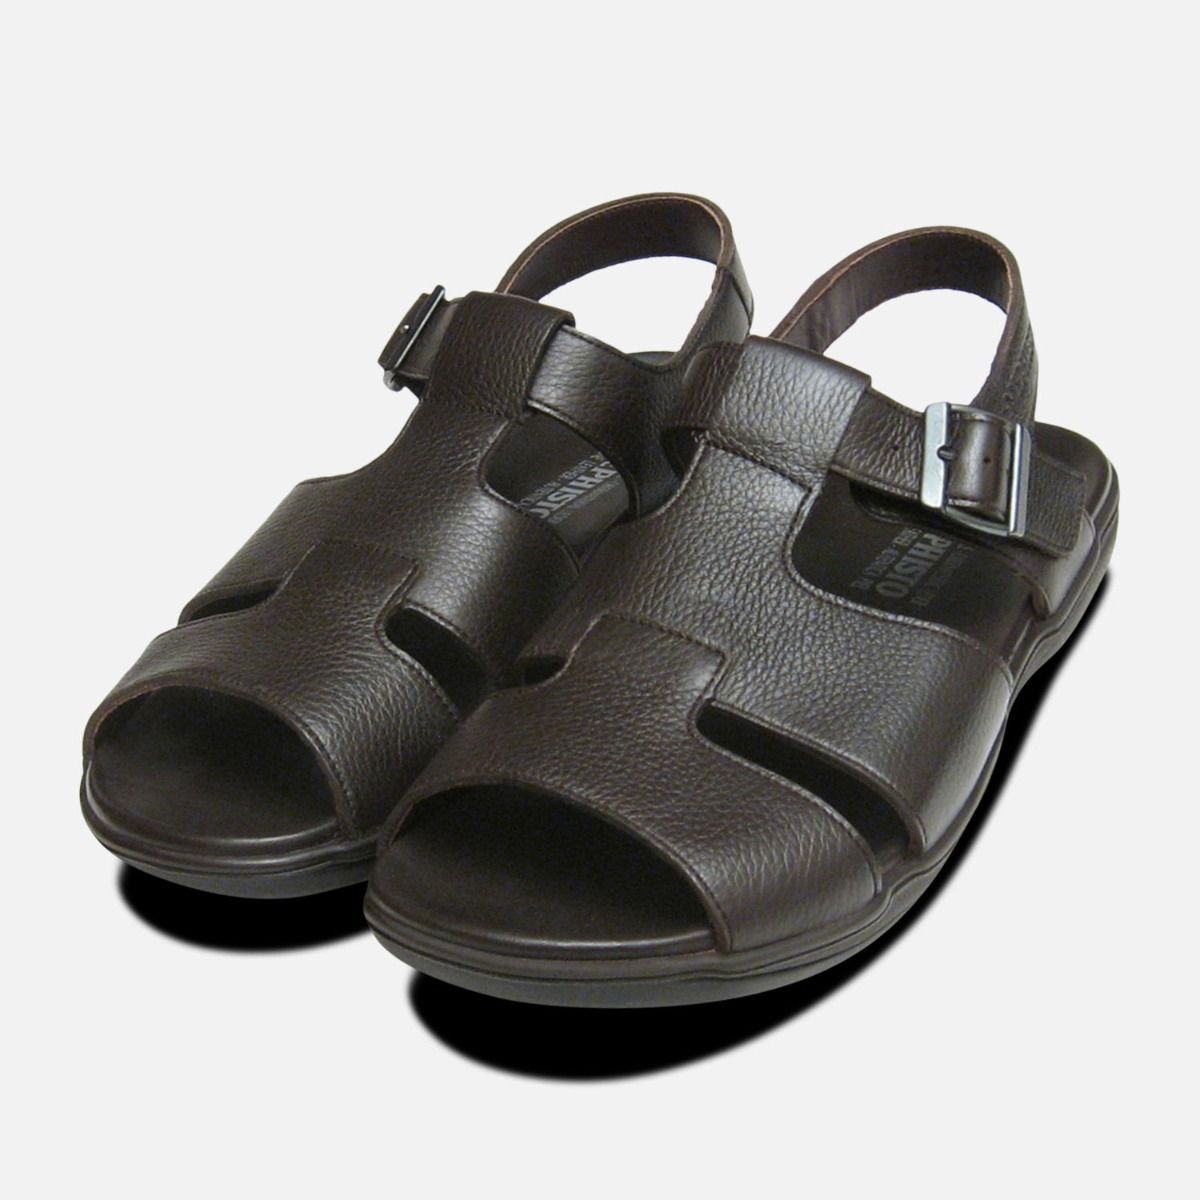 mephisto leather sandals